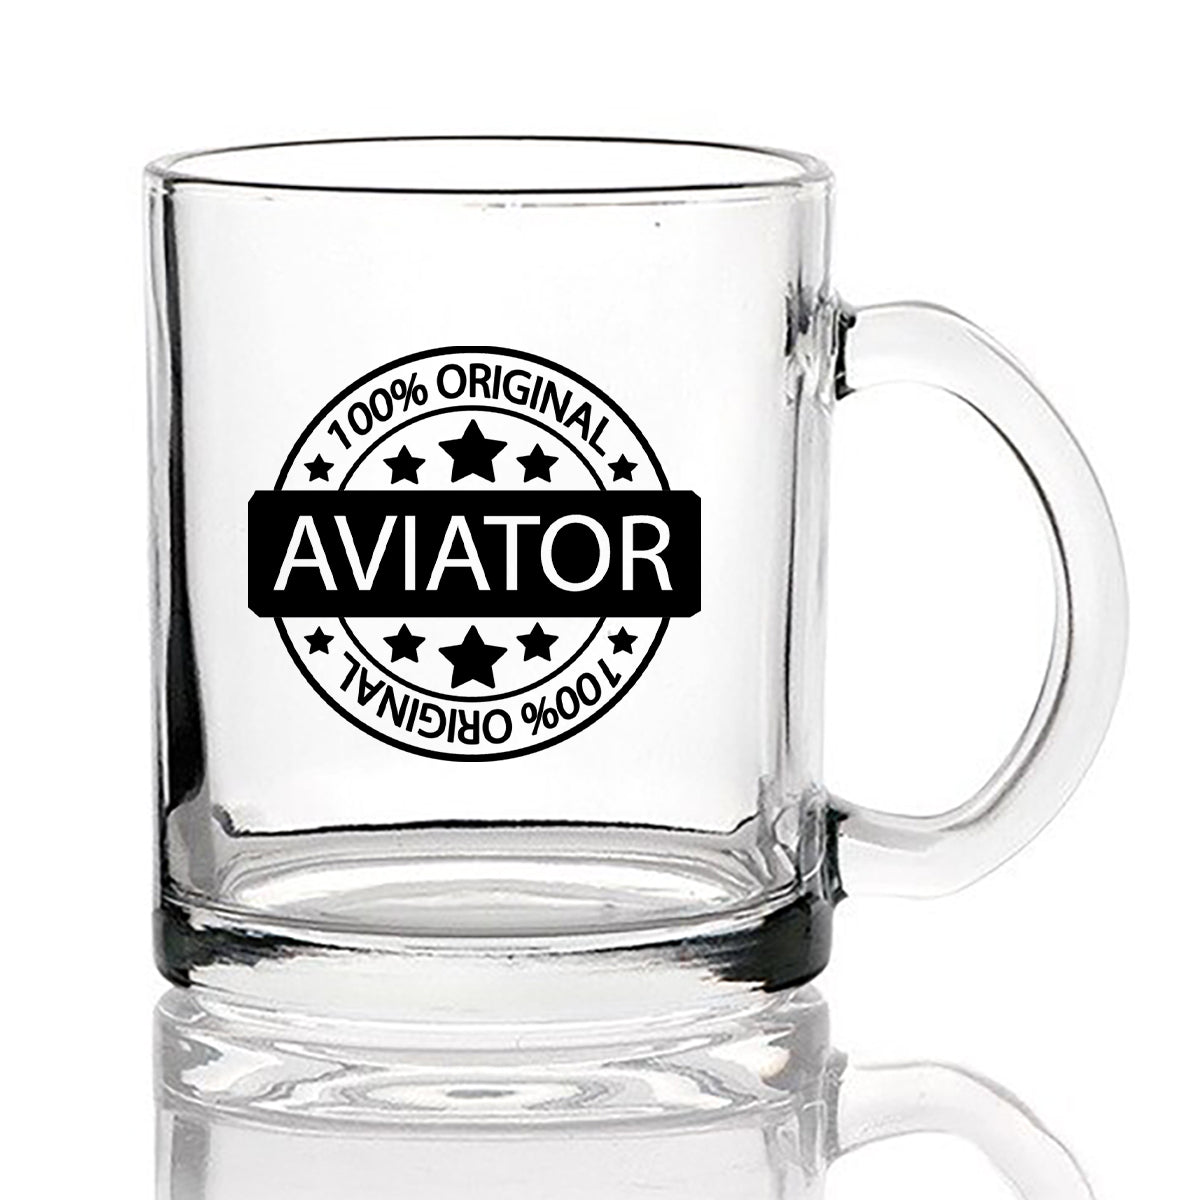 %100 Original Aviator Designed Coffee & Tea Glasses